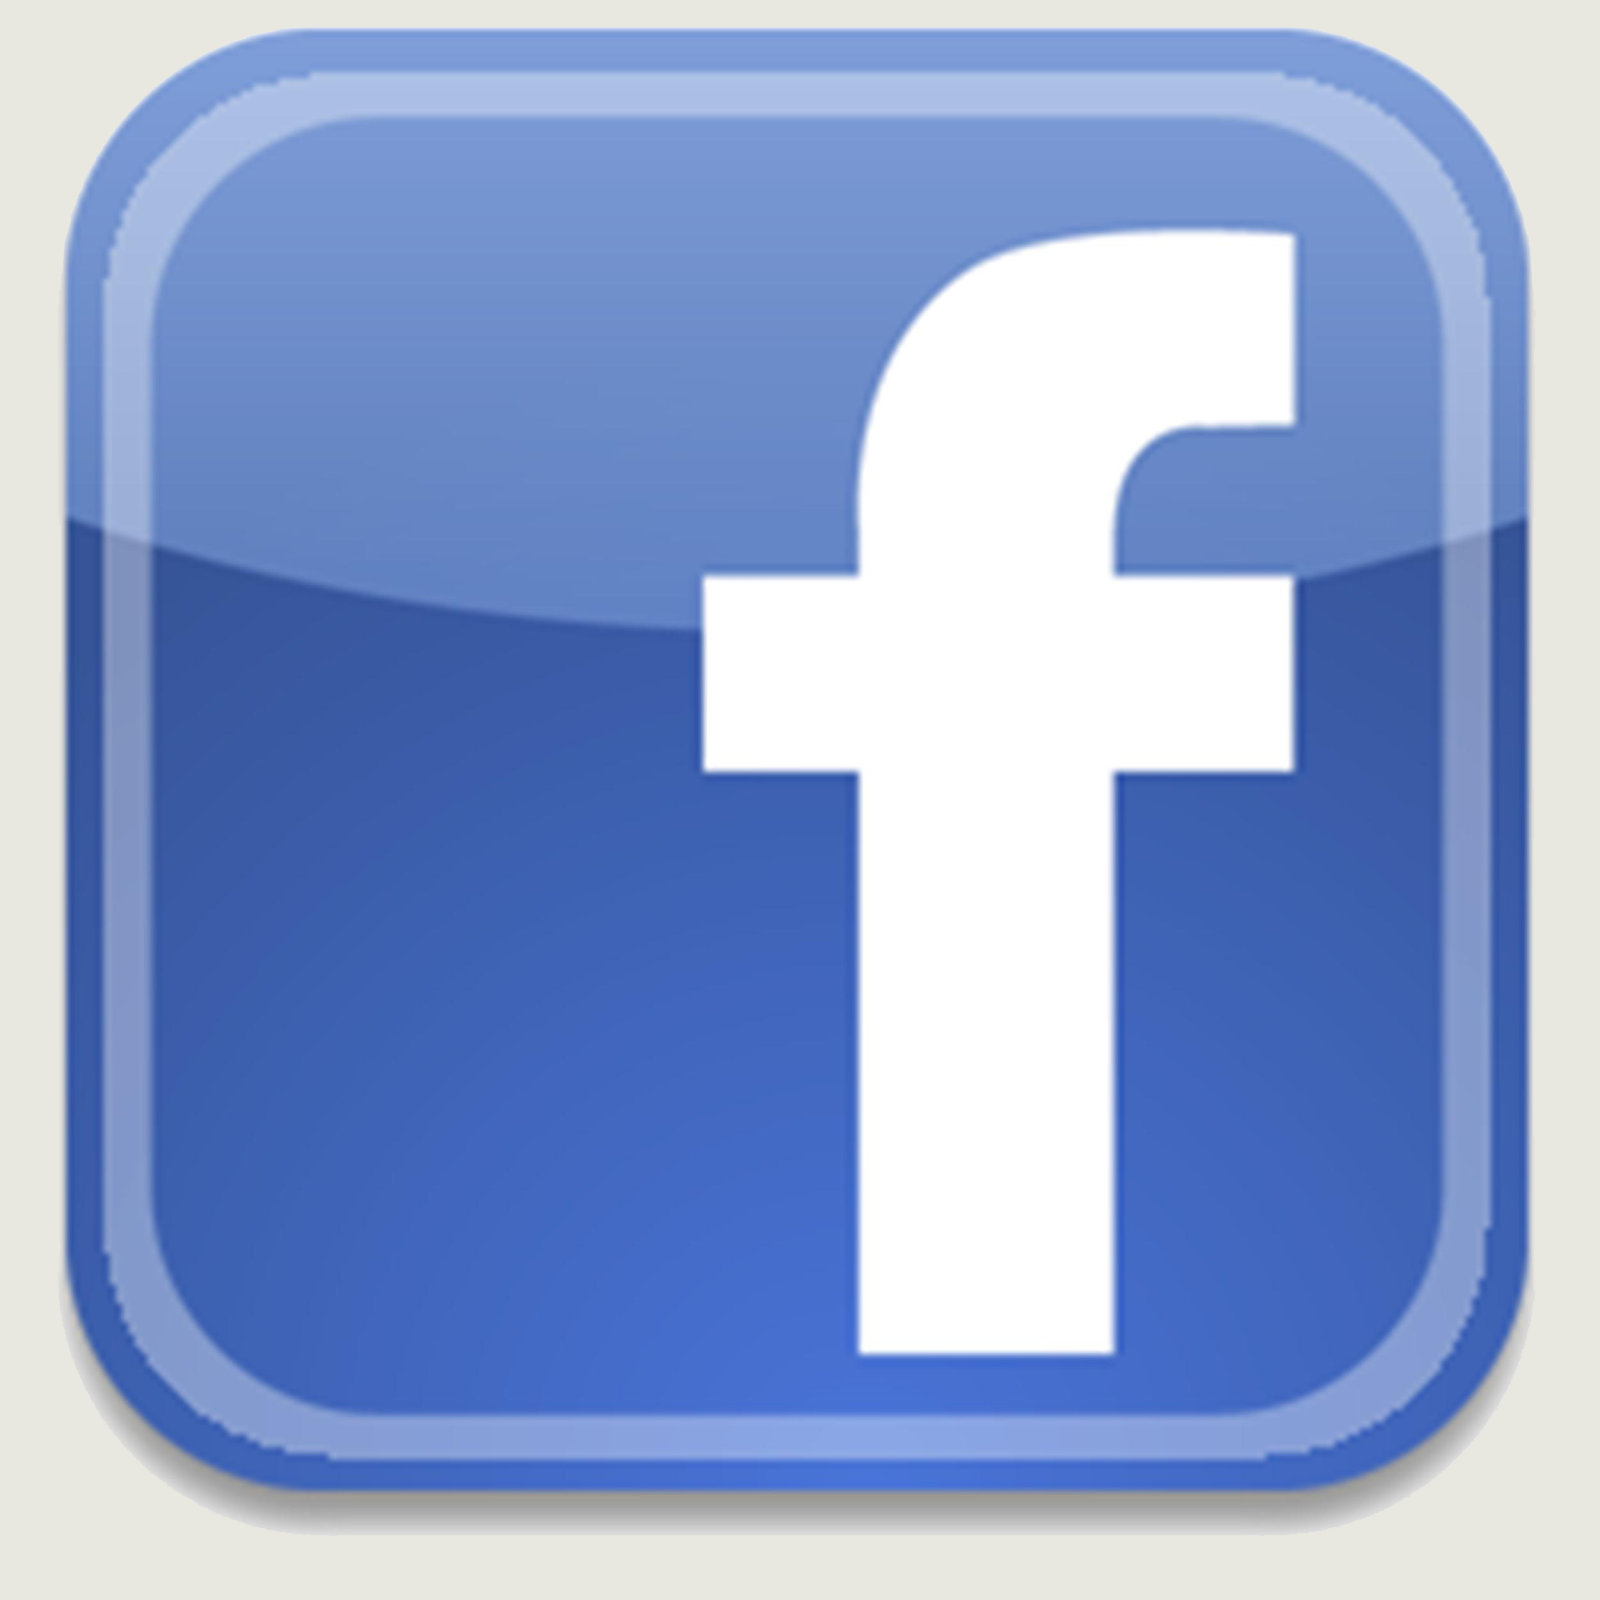 følg oss på facebook